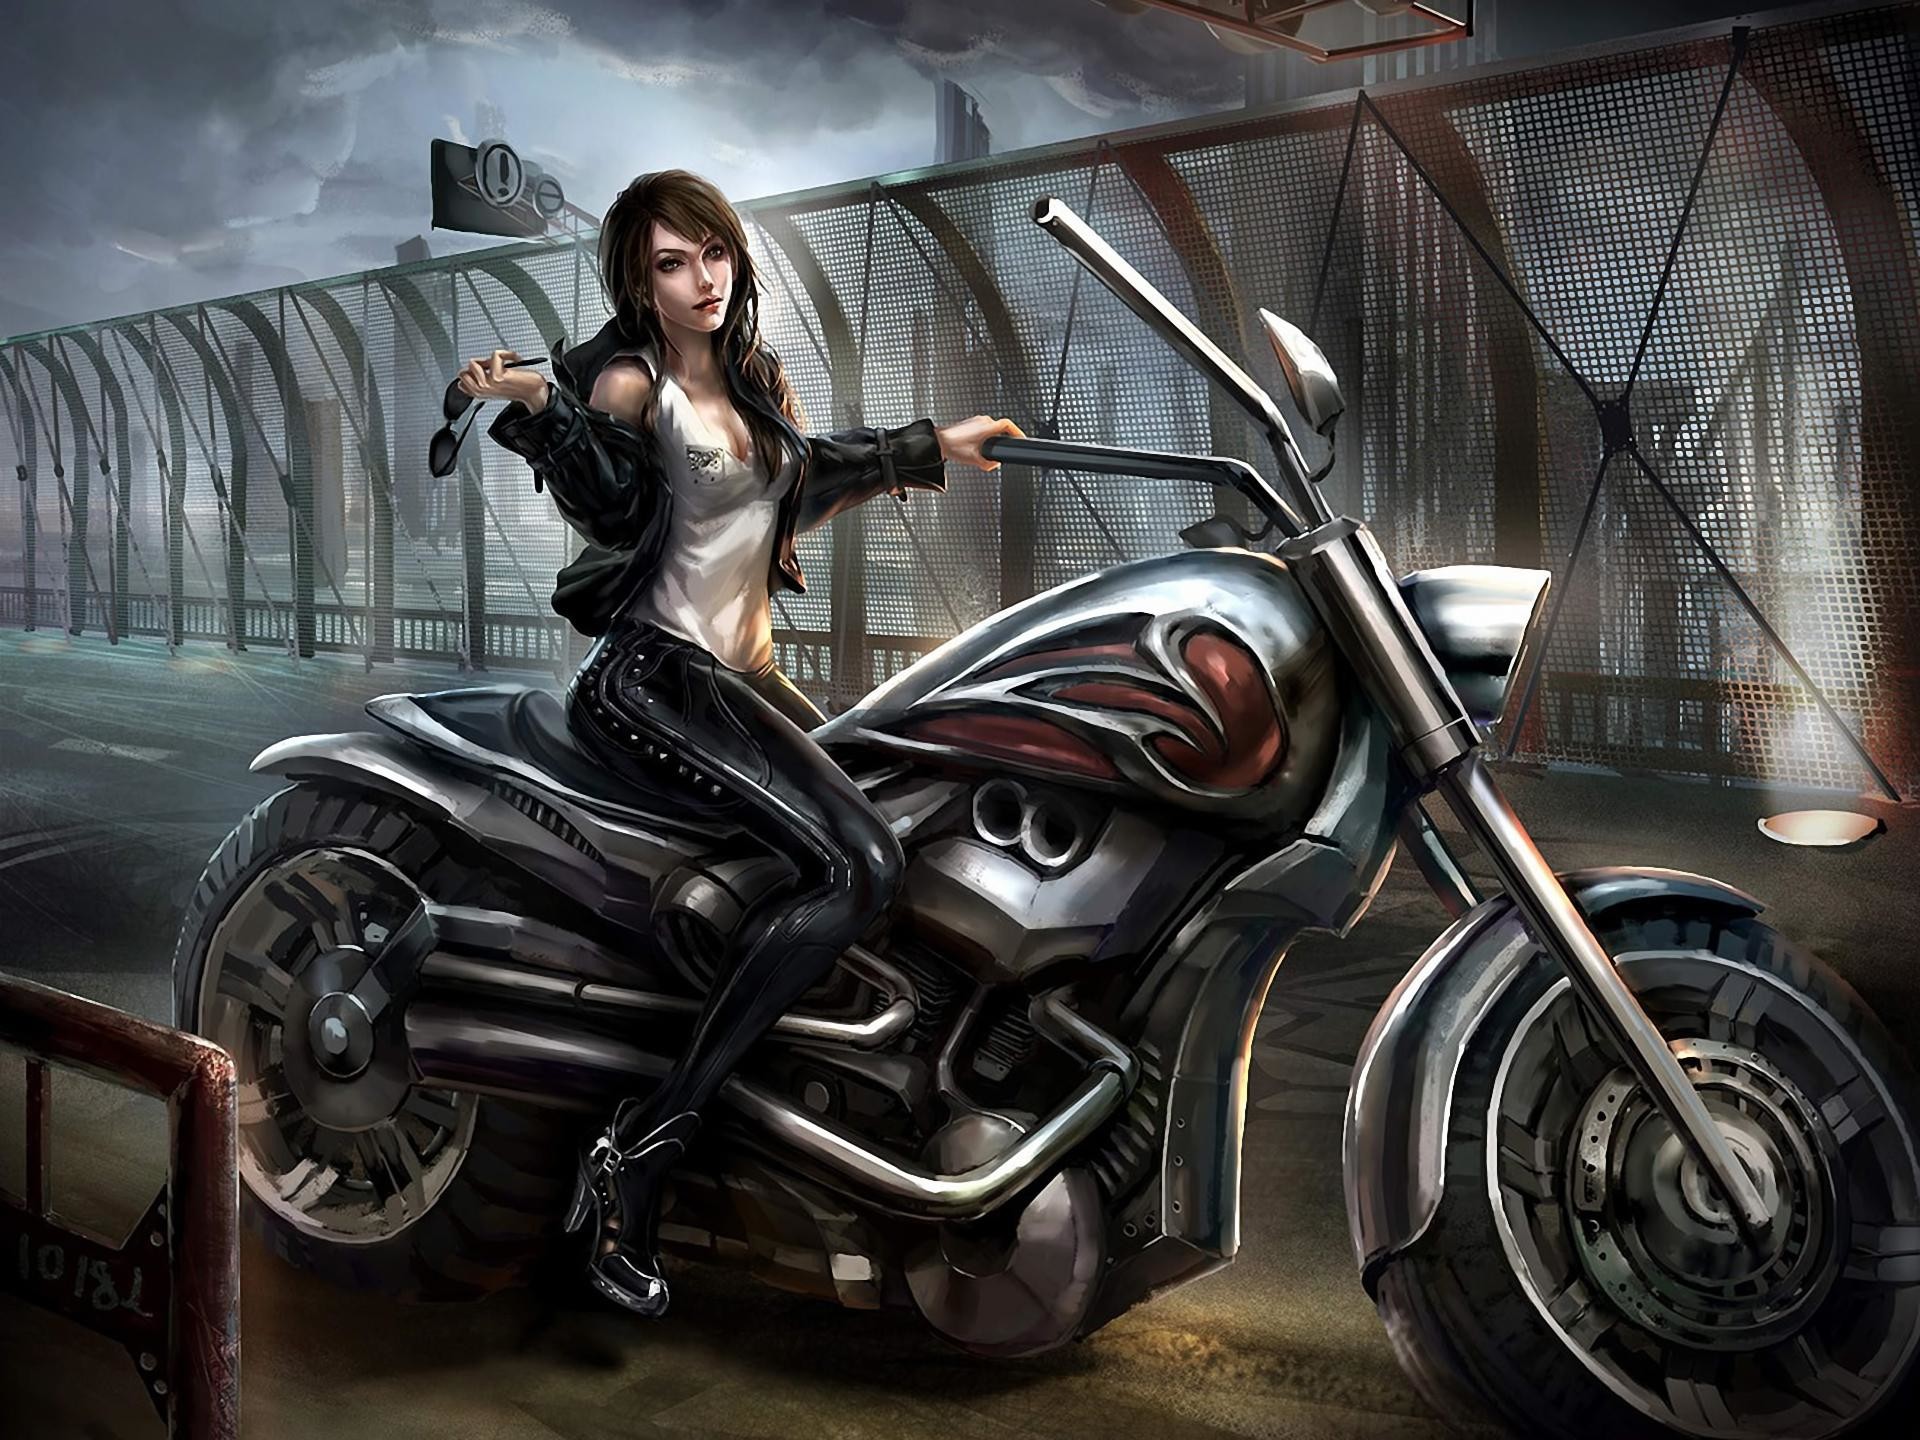 1920x1440 HD Motorcycle Girl Wallpaper. Download Motorcycle Girl Desktop  Backgrounds,Photos in HD Widescreen High